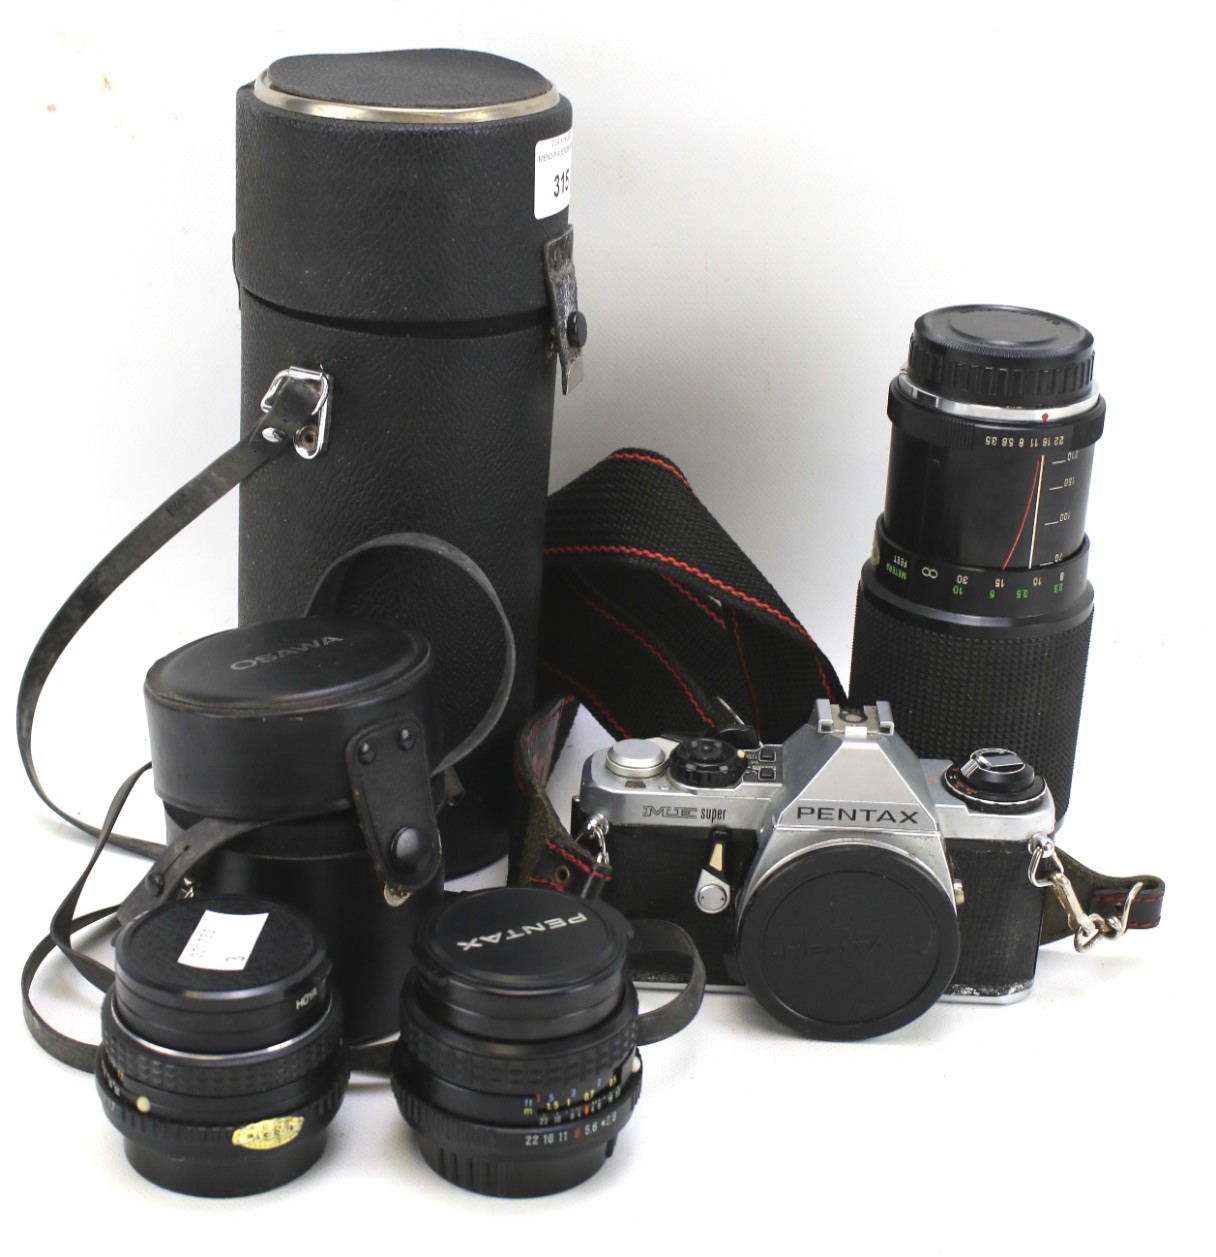 A Pentax 35mm SLR camera and three lenses.